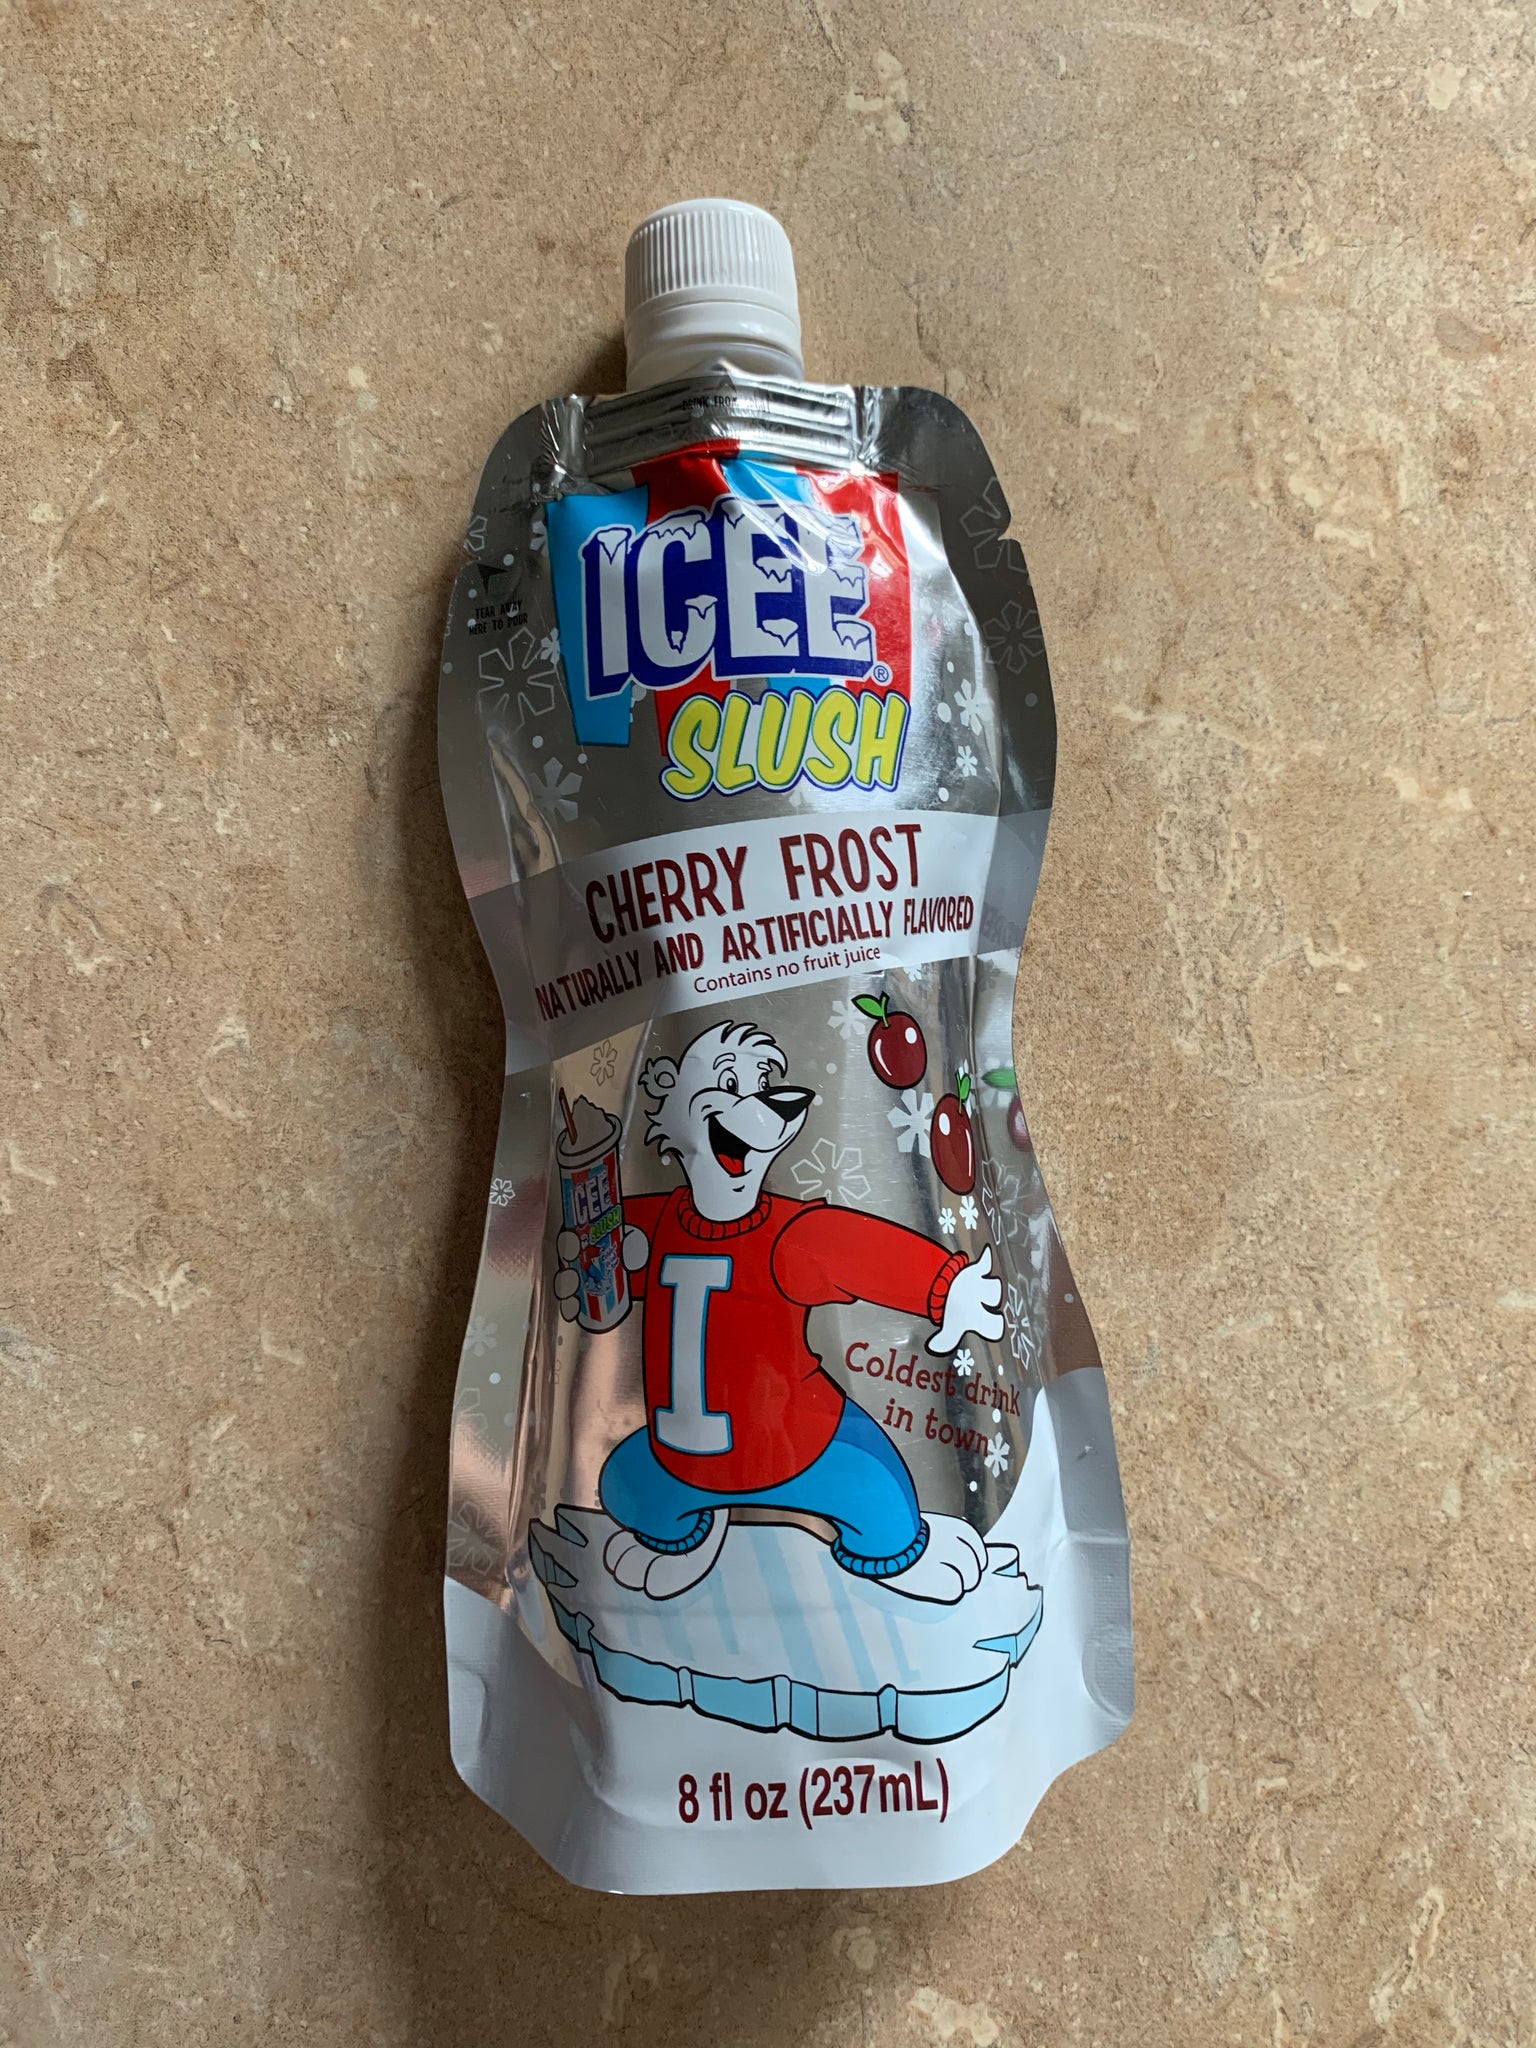 Icee Slush Cherry Frost Cerealizate Pricmx 2353